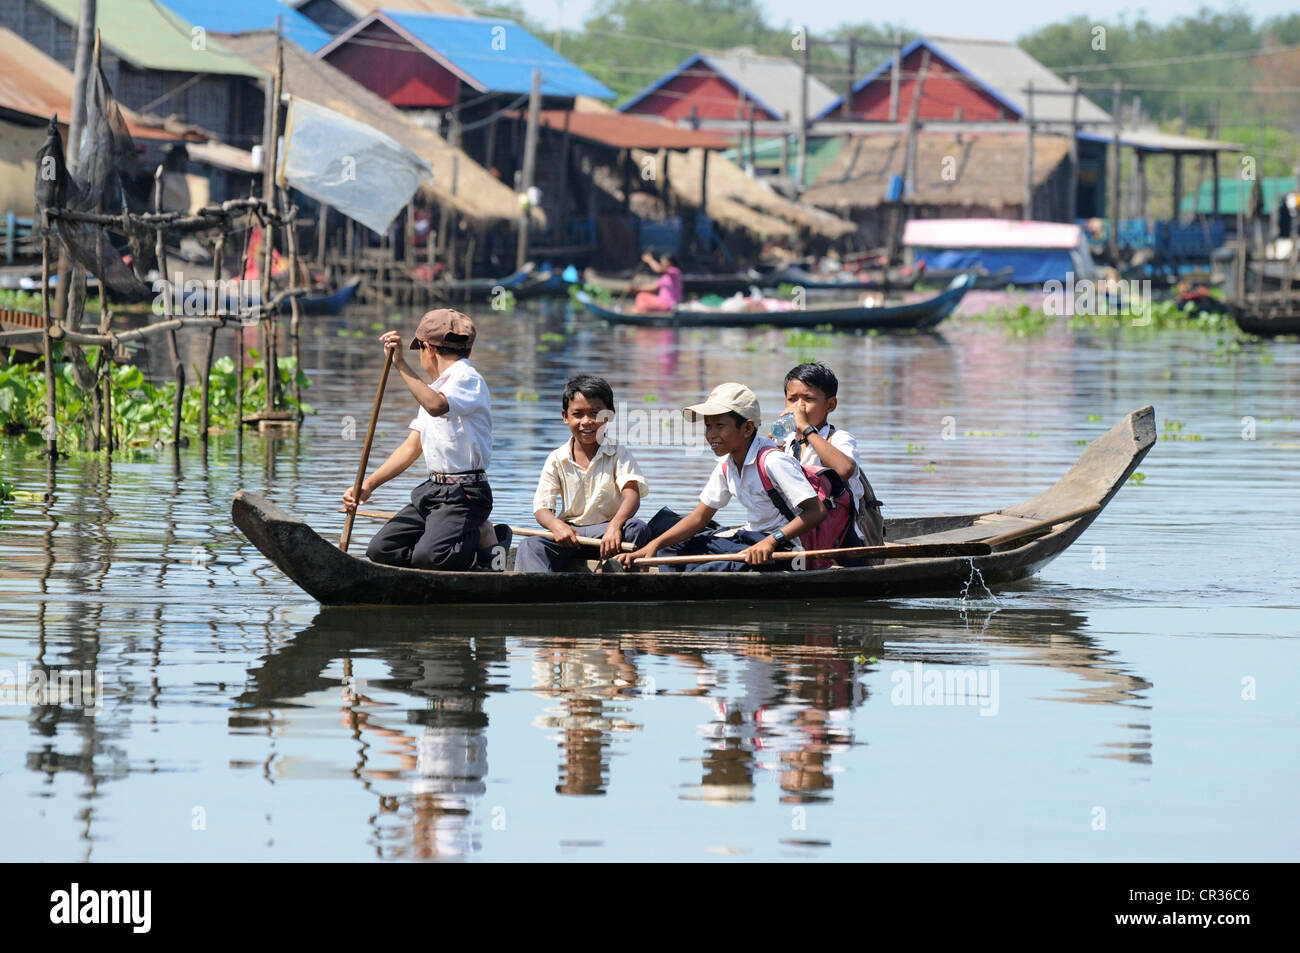 Children, rowboat, floating village, boating, Tonle Sap Lake, Cambodia, Southeast Asia Stock Photo